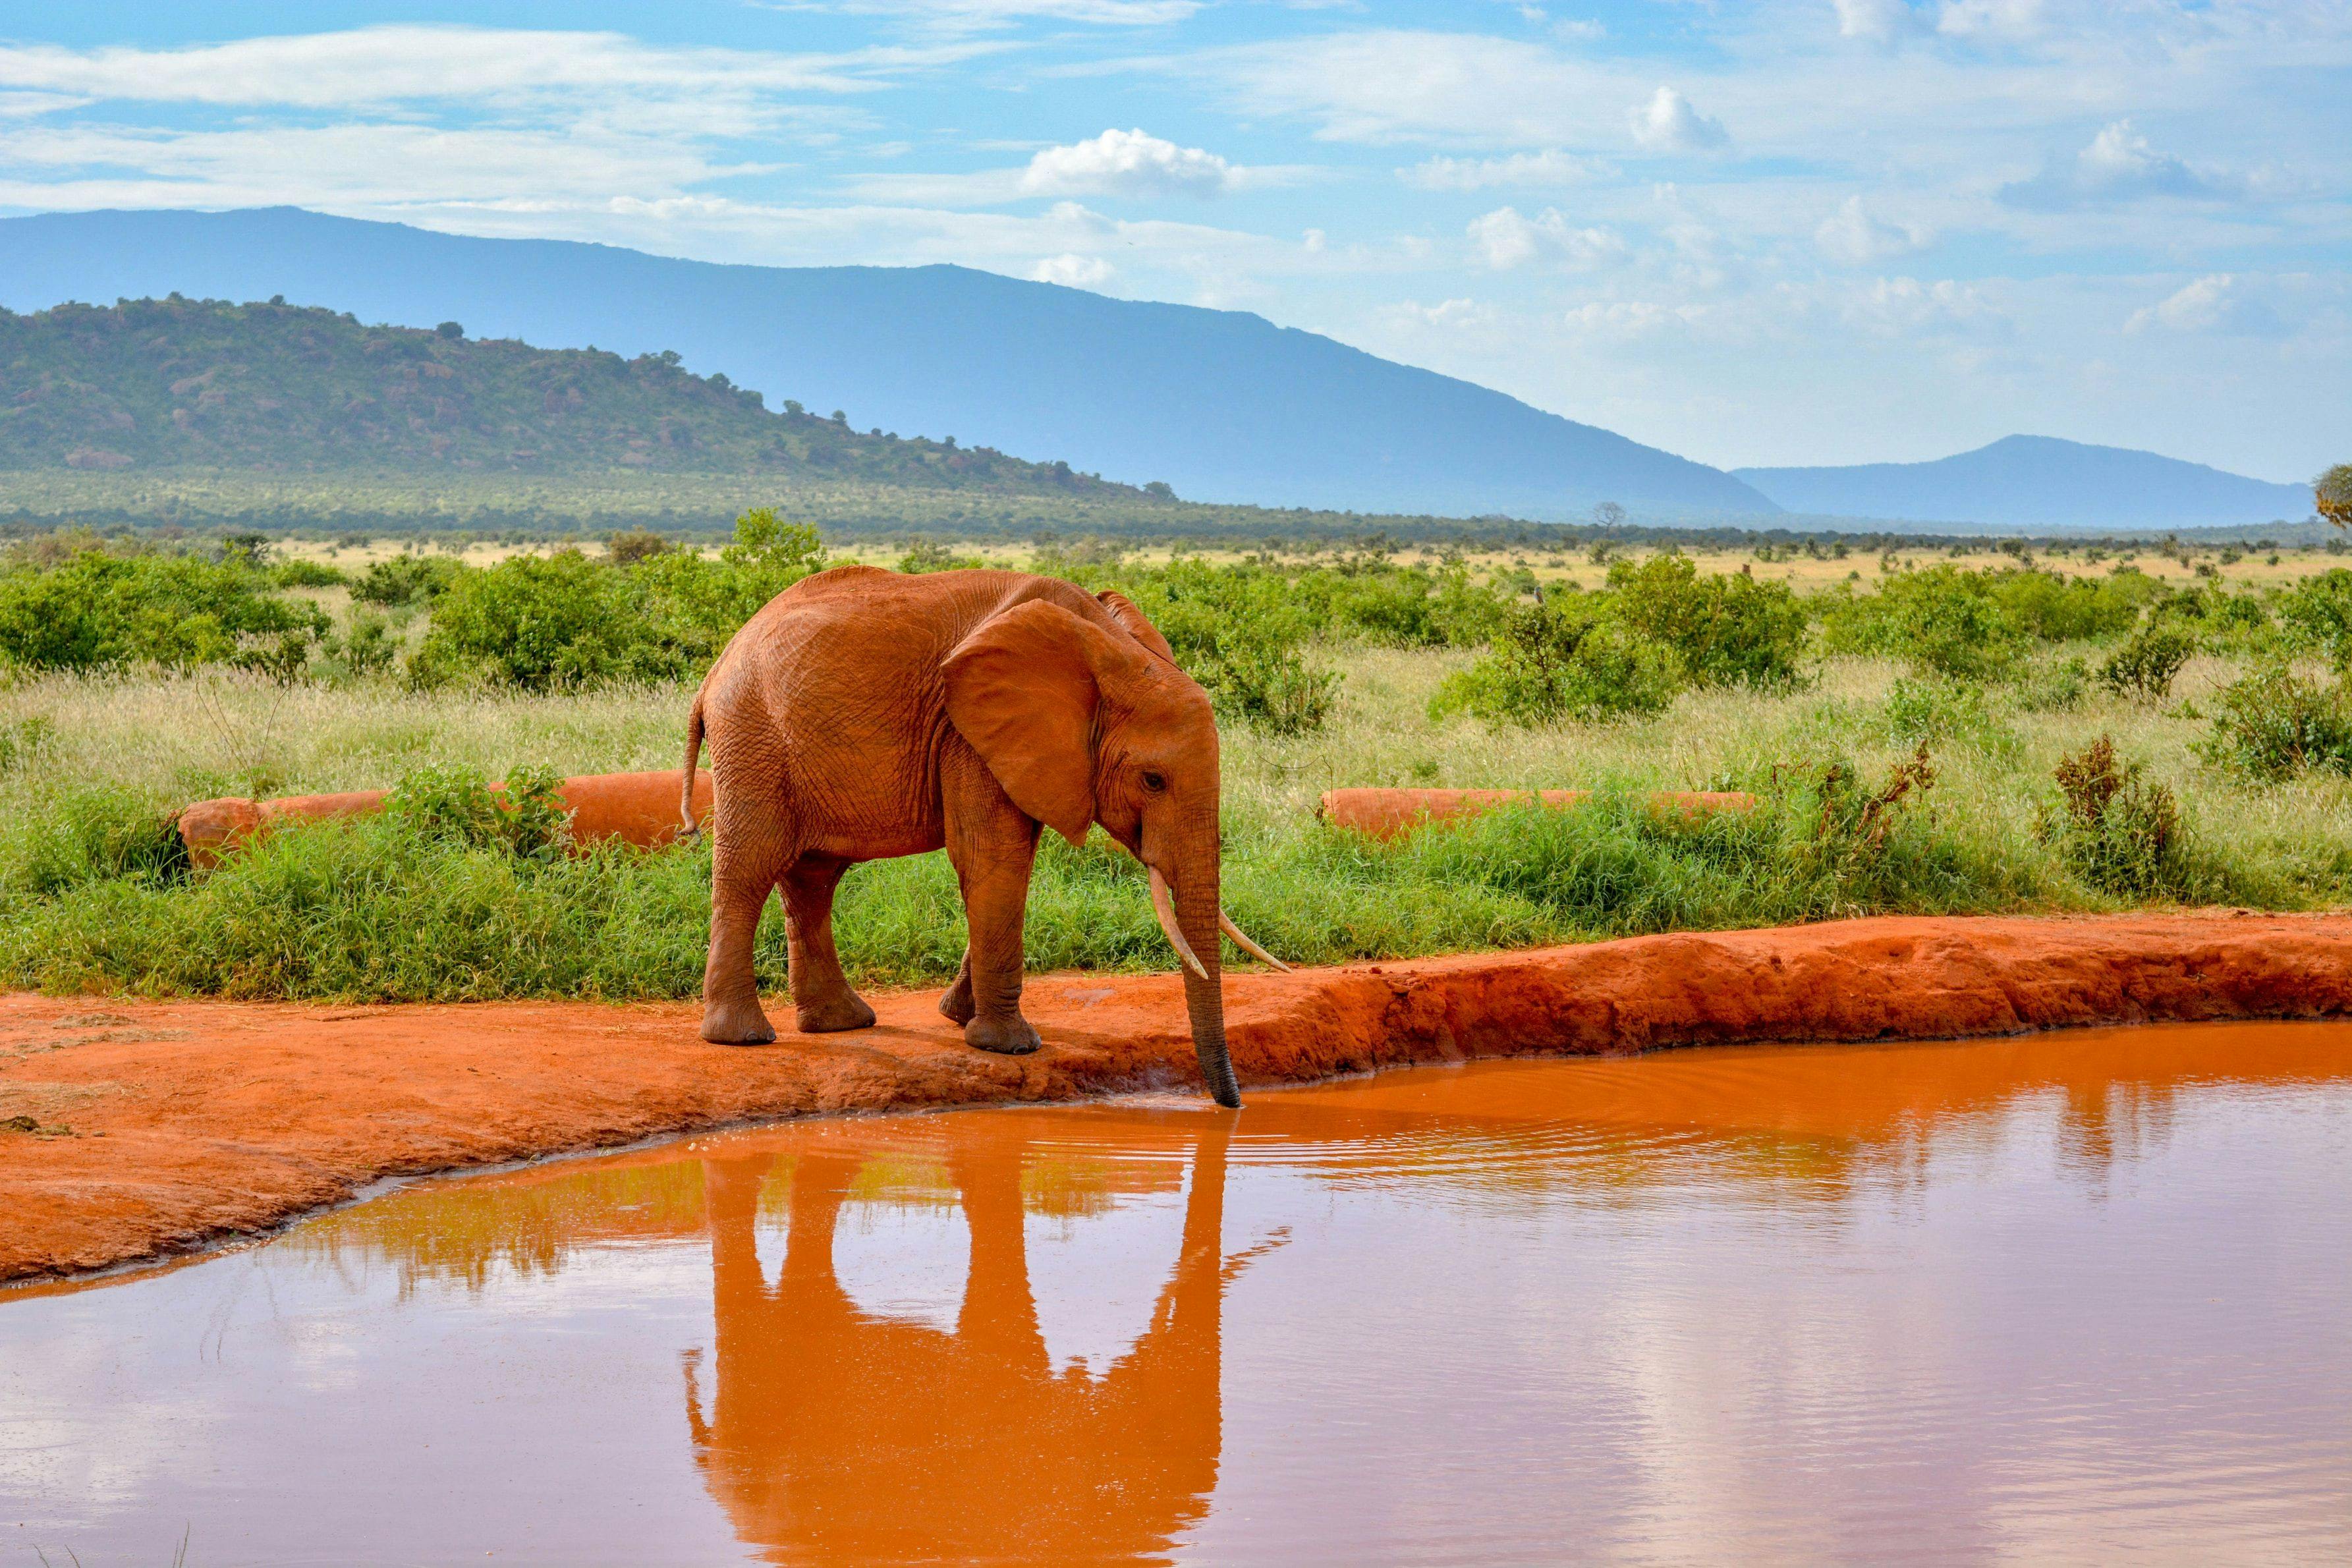 Elephant drinking water in Maasai Mara national park in Kenya.